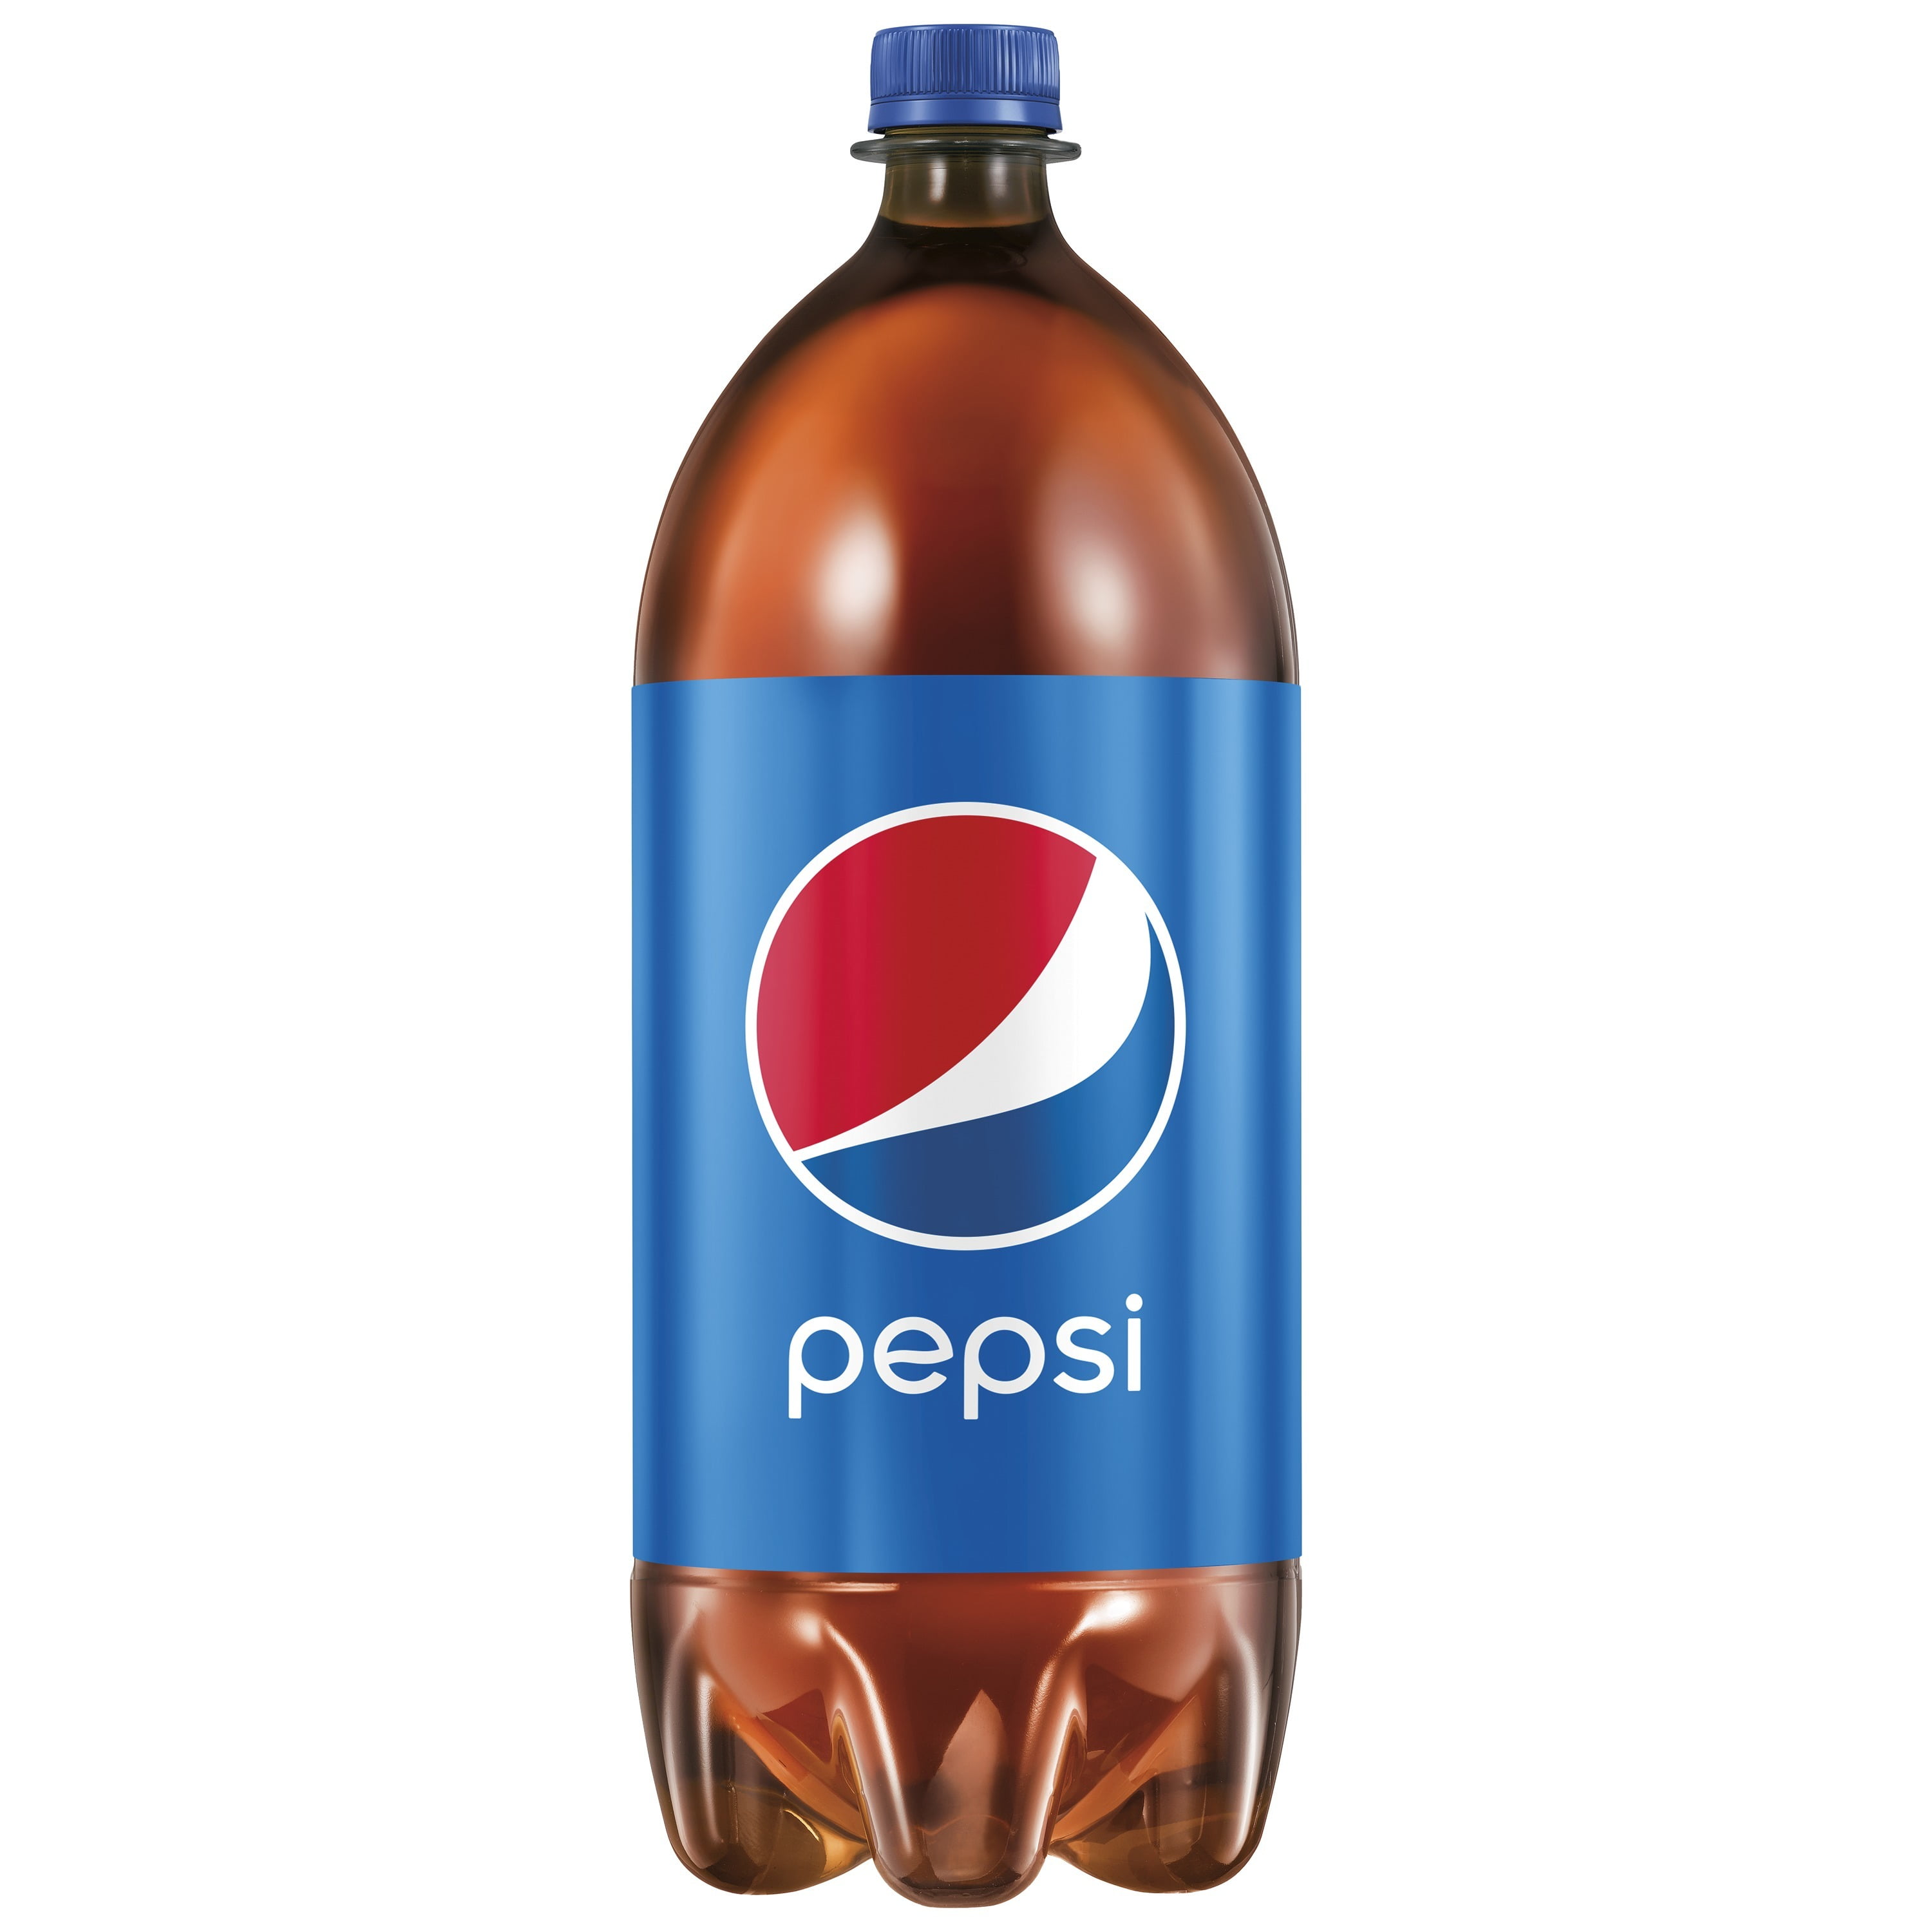 buy-pepsi-cola-soda-pop-2-liter-bottle-online-at-lowest-price-in-ubuy